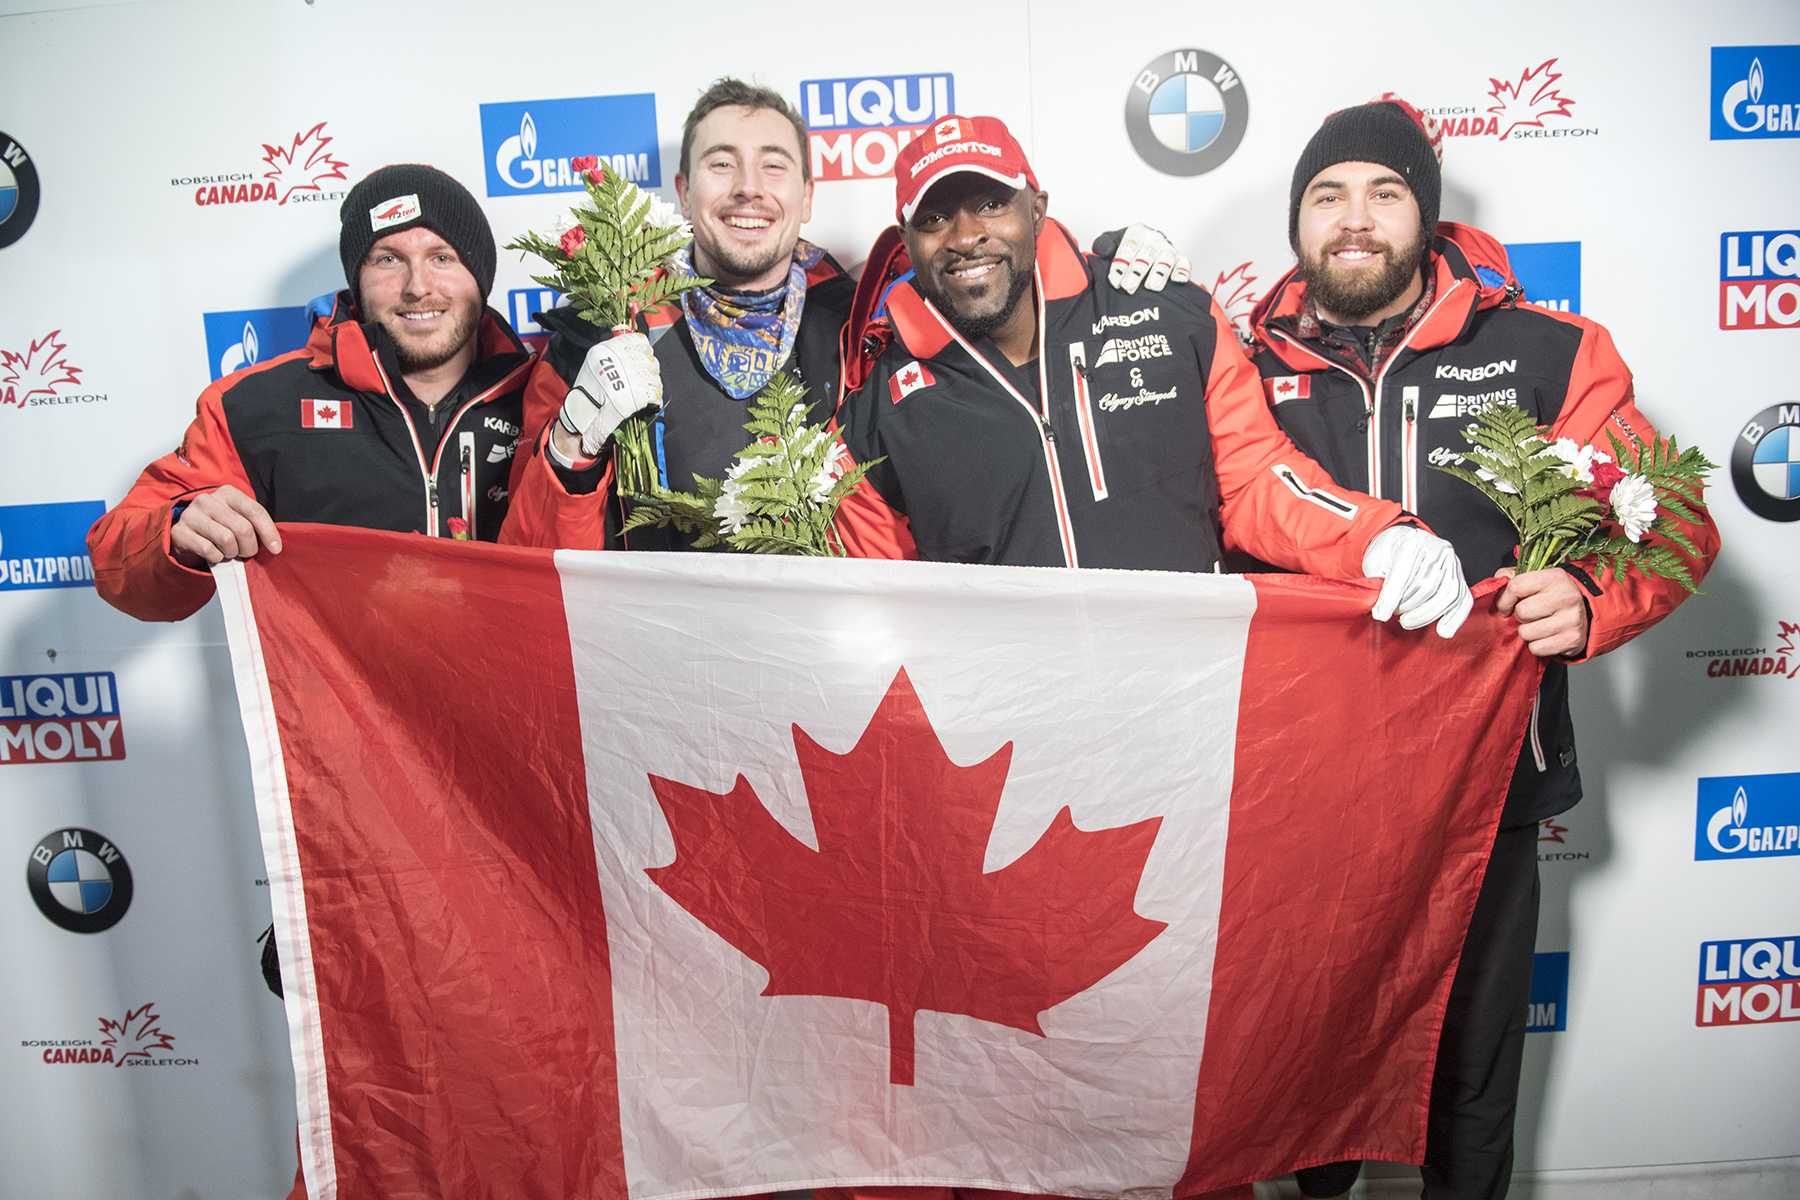 Team Canada - Justin Kripps, Alexander Kopacz, Neville Wright, and Chris Spring celebrate their 1-2 finish